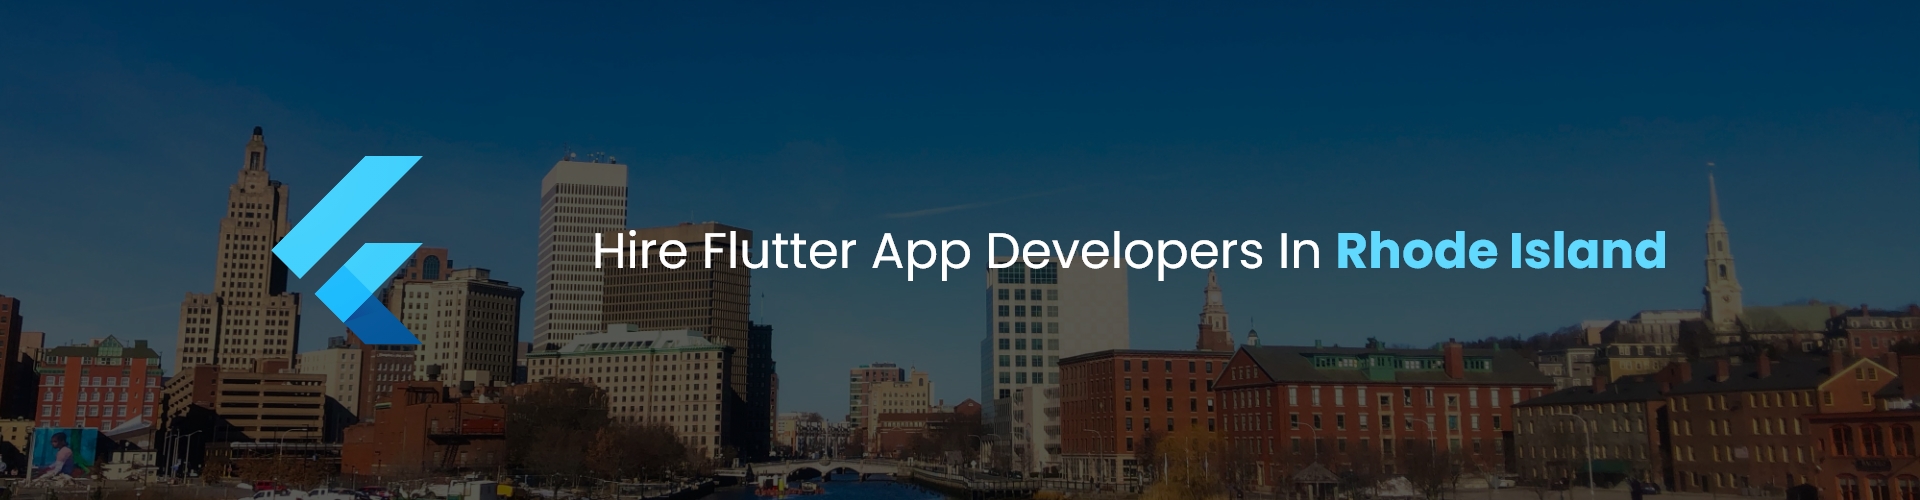 hire flutter app developers in rhode island